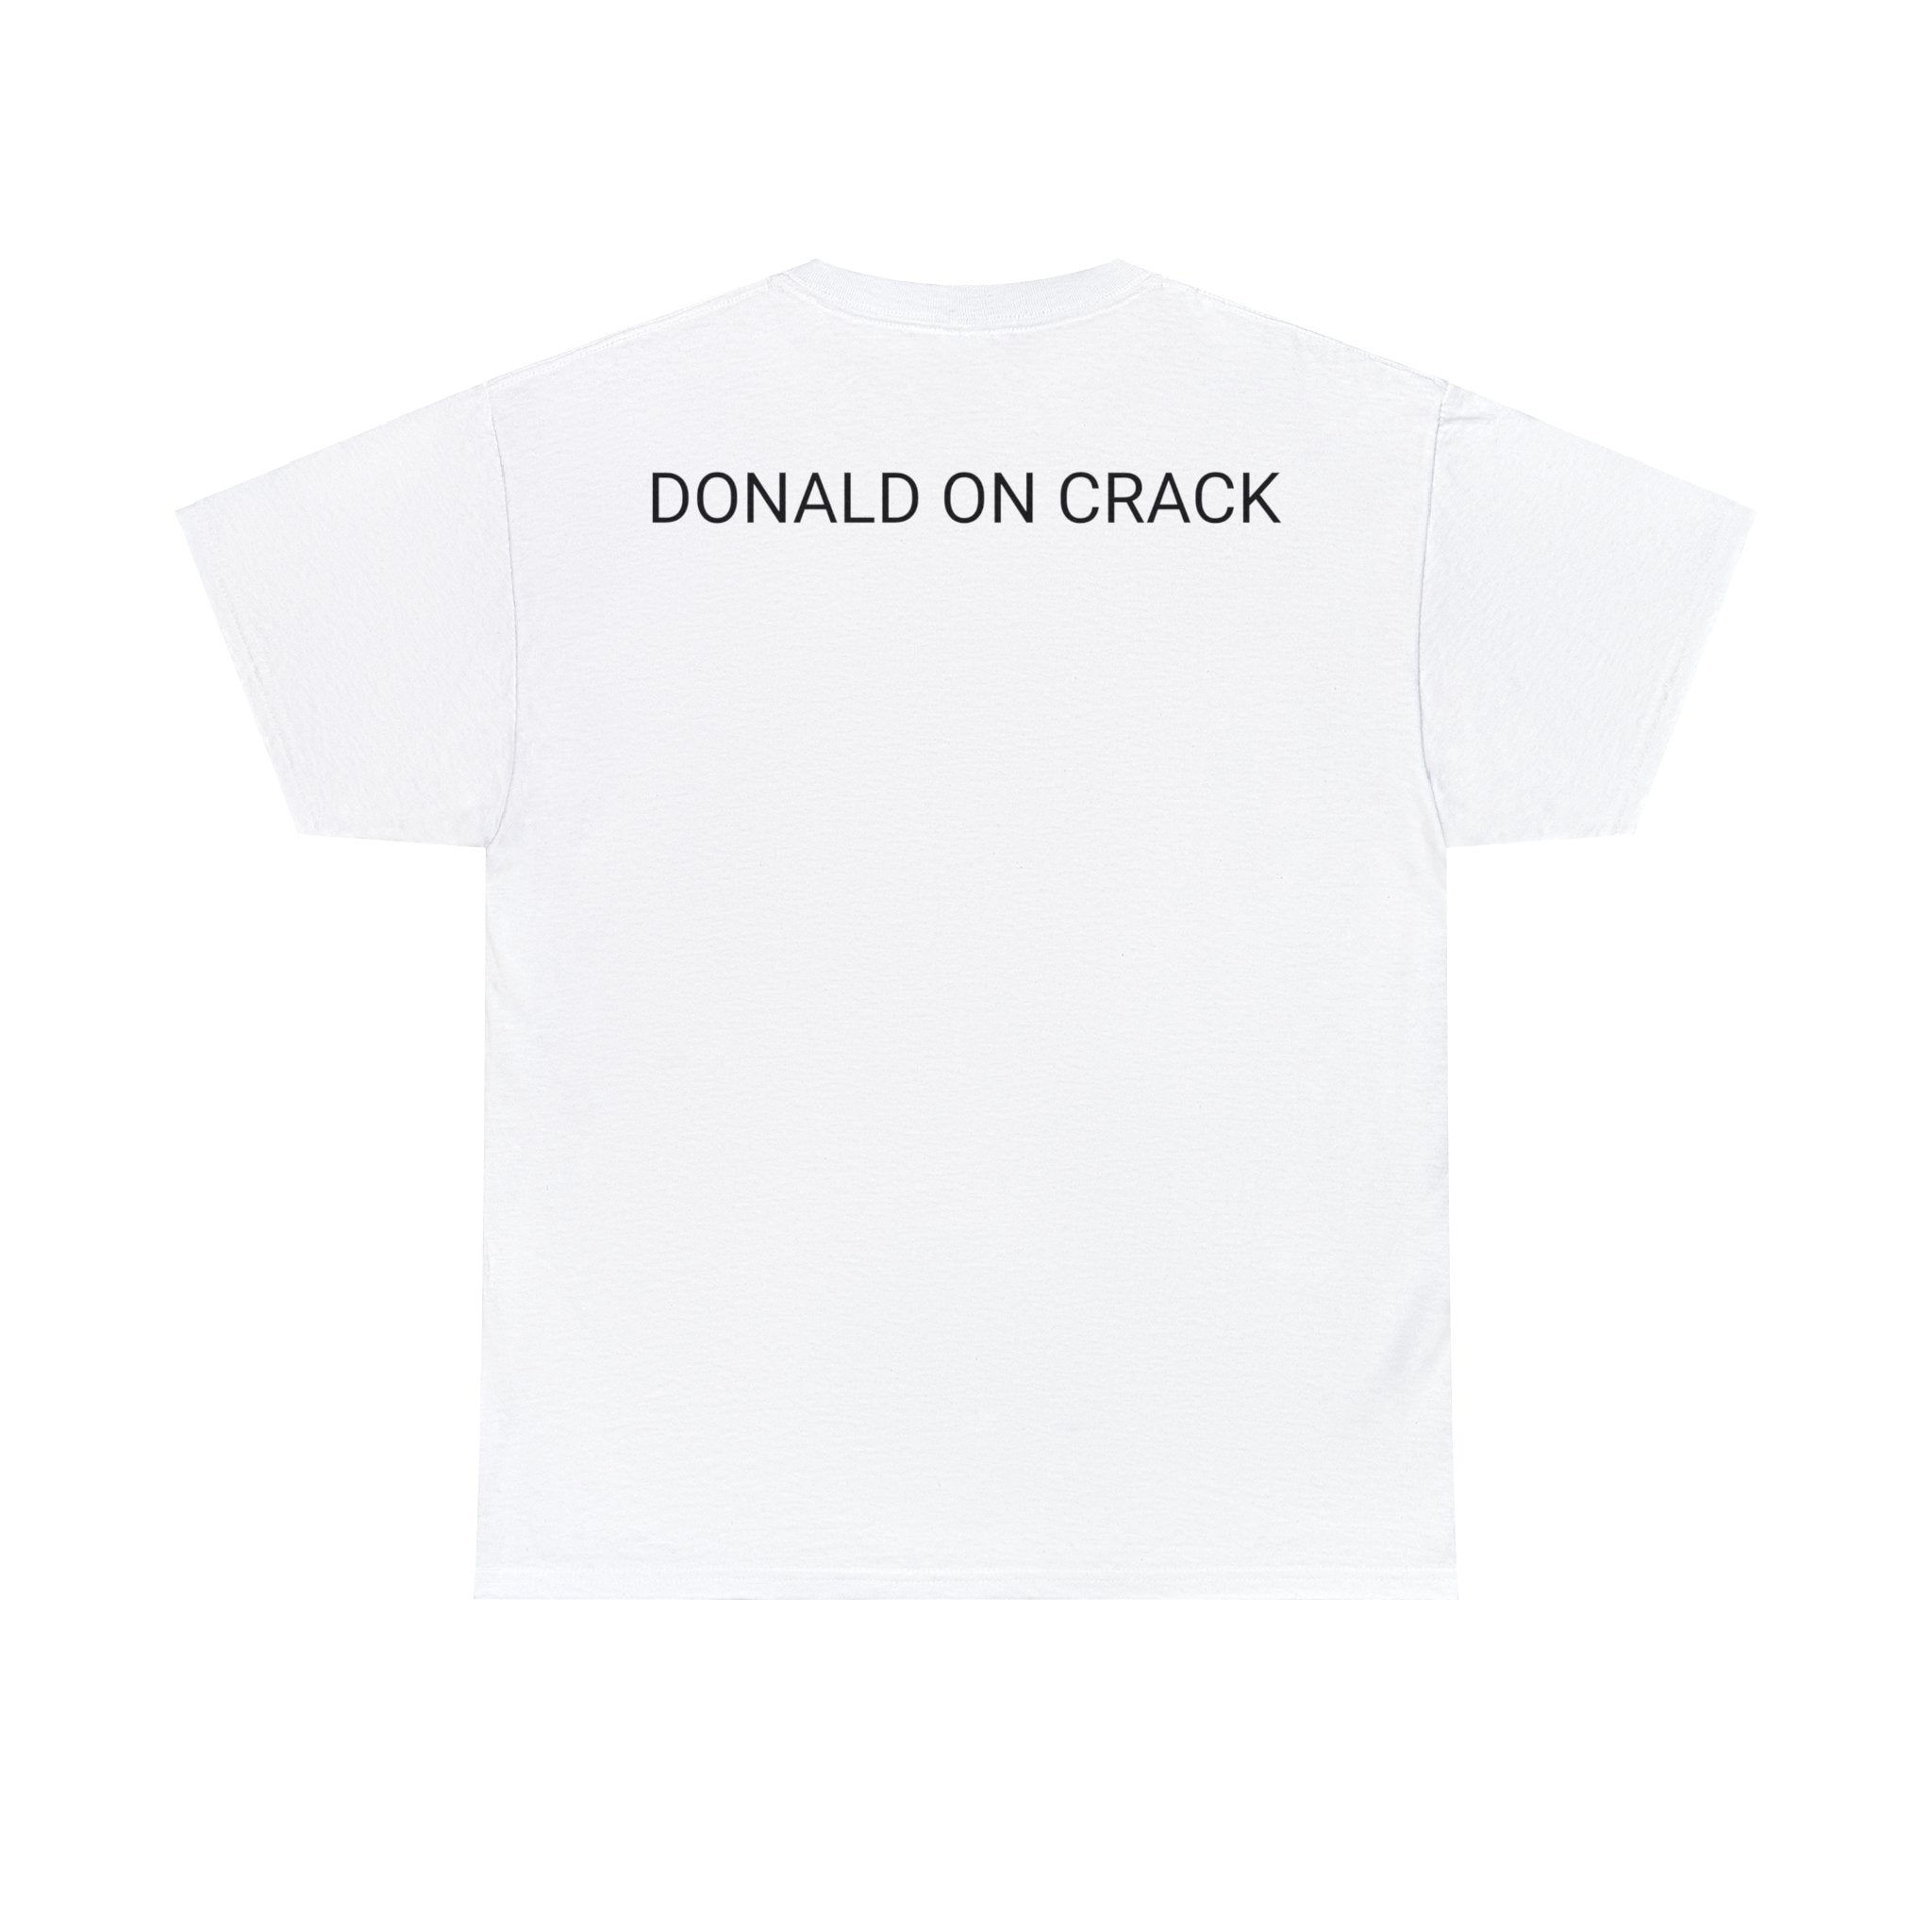 "DONALD ON CRACK 2.0" T-Shirt